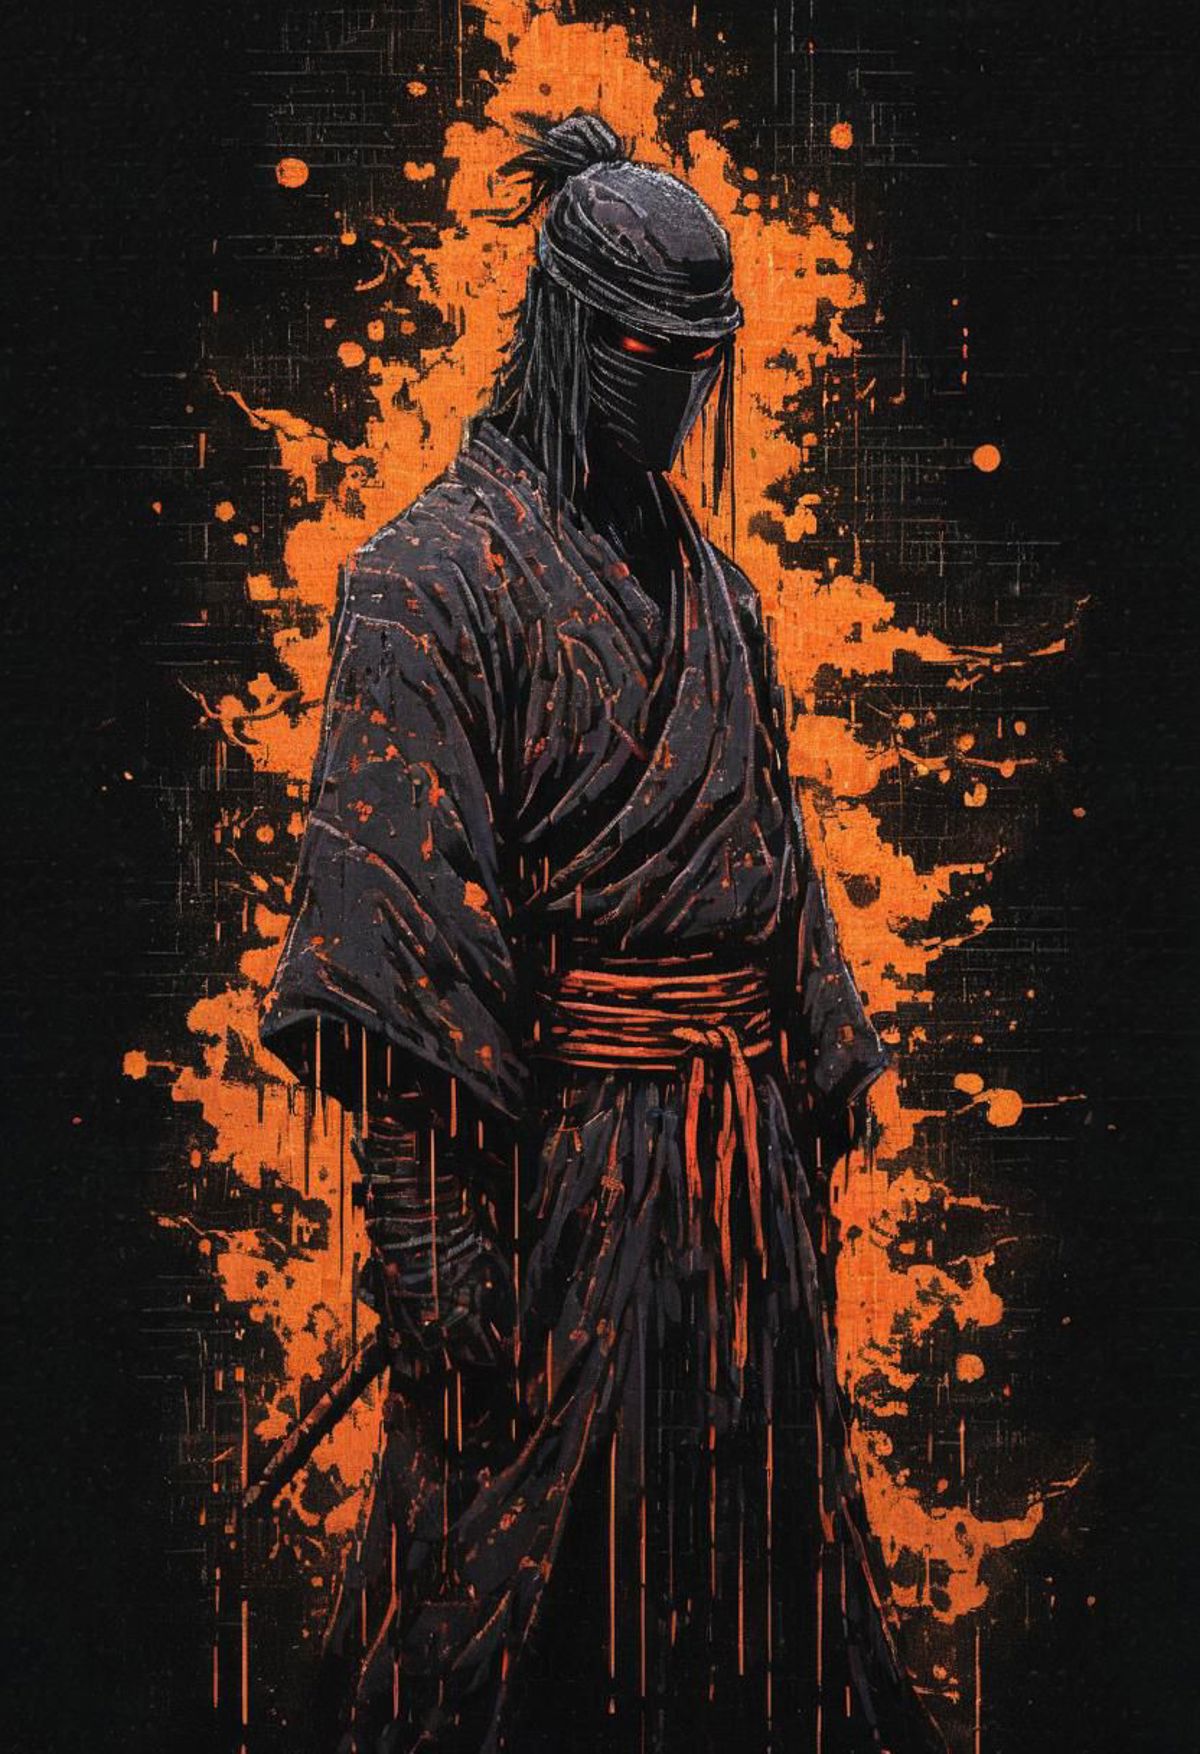 Samurai in a Black and Orange Artistic Poster